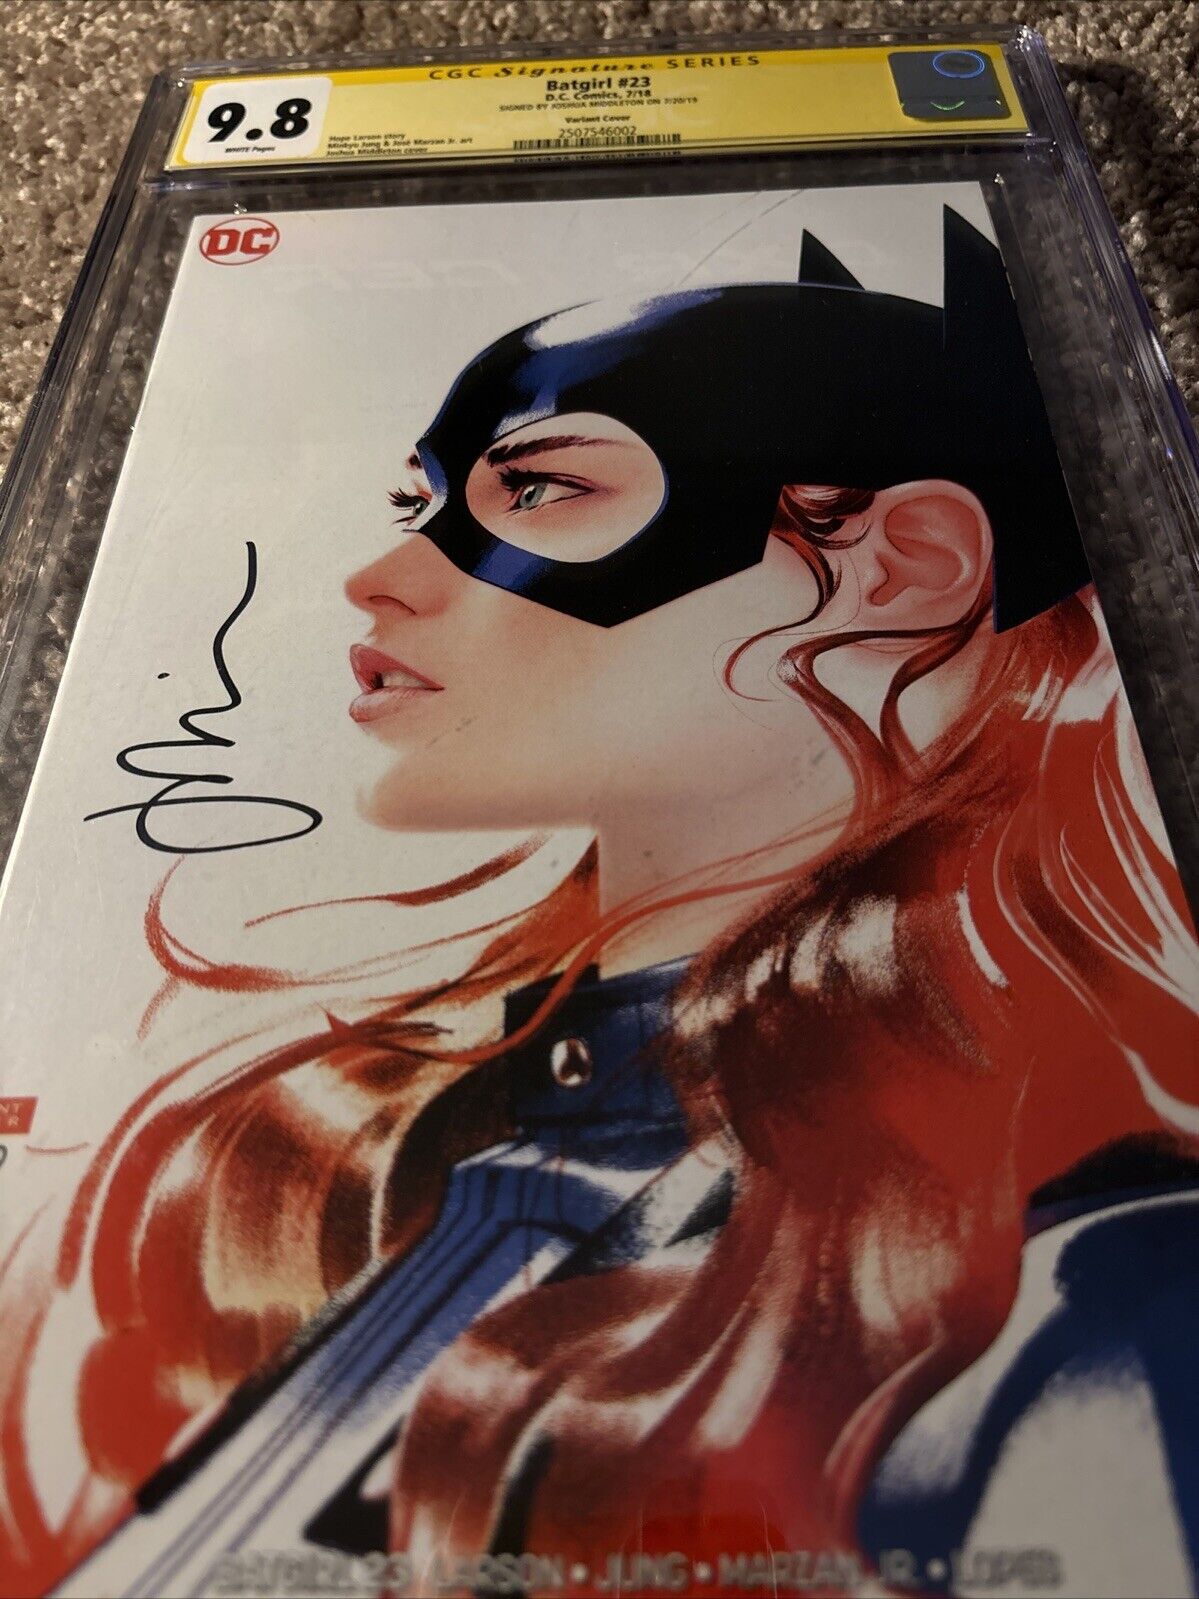 Batgirl #23 1st Print Middleton Signature And Remarks Variant Cover CBCS 9.8